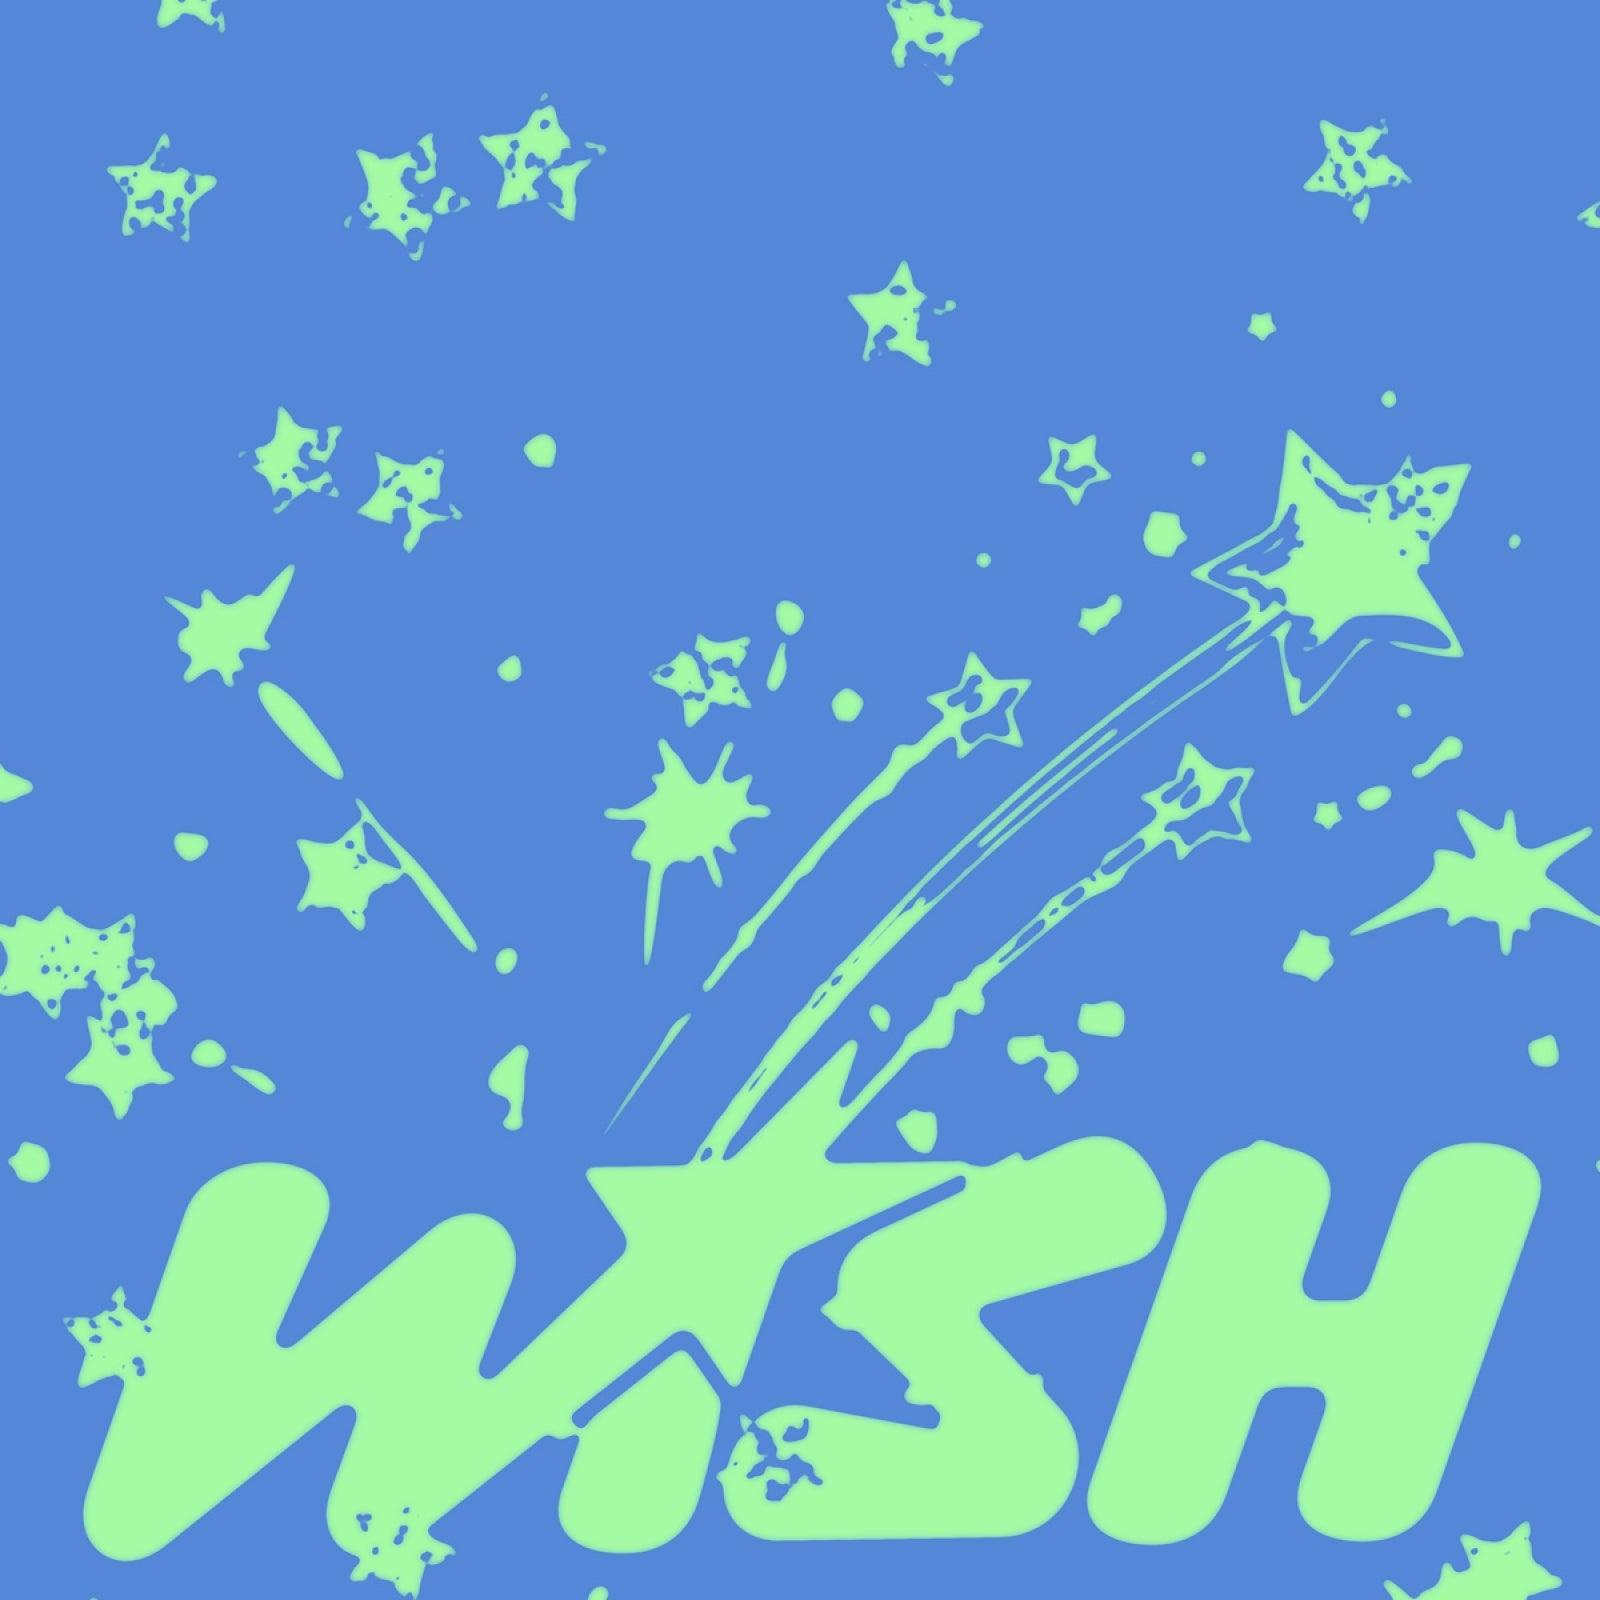 NCT WISH - WISH / SINGLE ALBUM (KEYRING VER.) (SMART ALBUM) - Shopping Around the World with Goodsnjoy